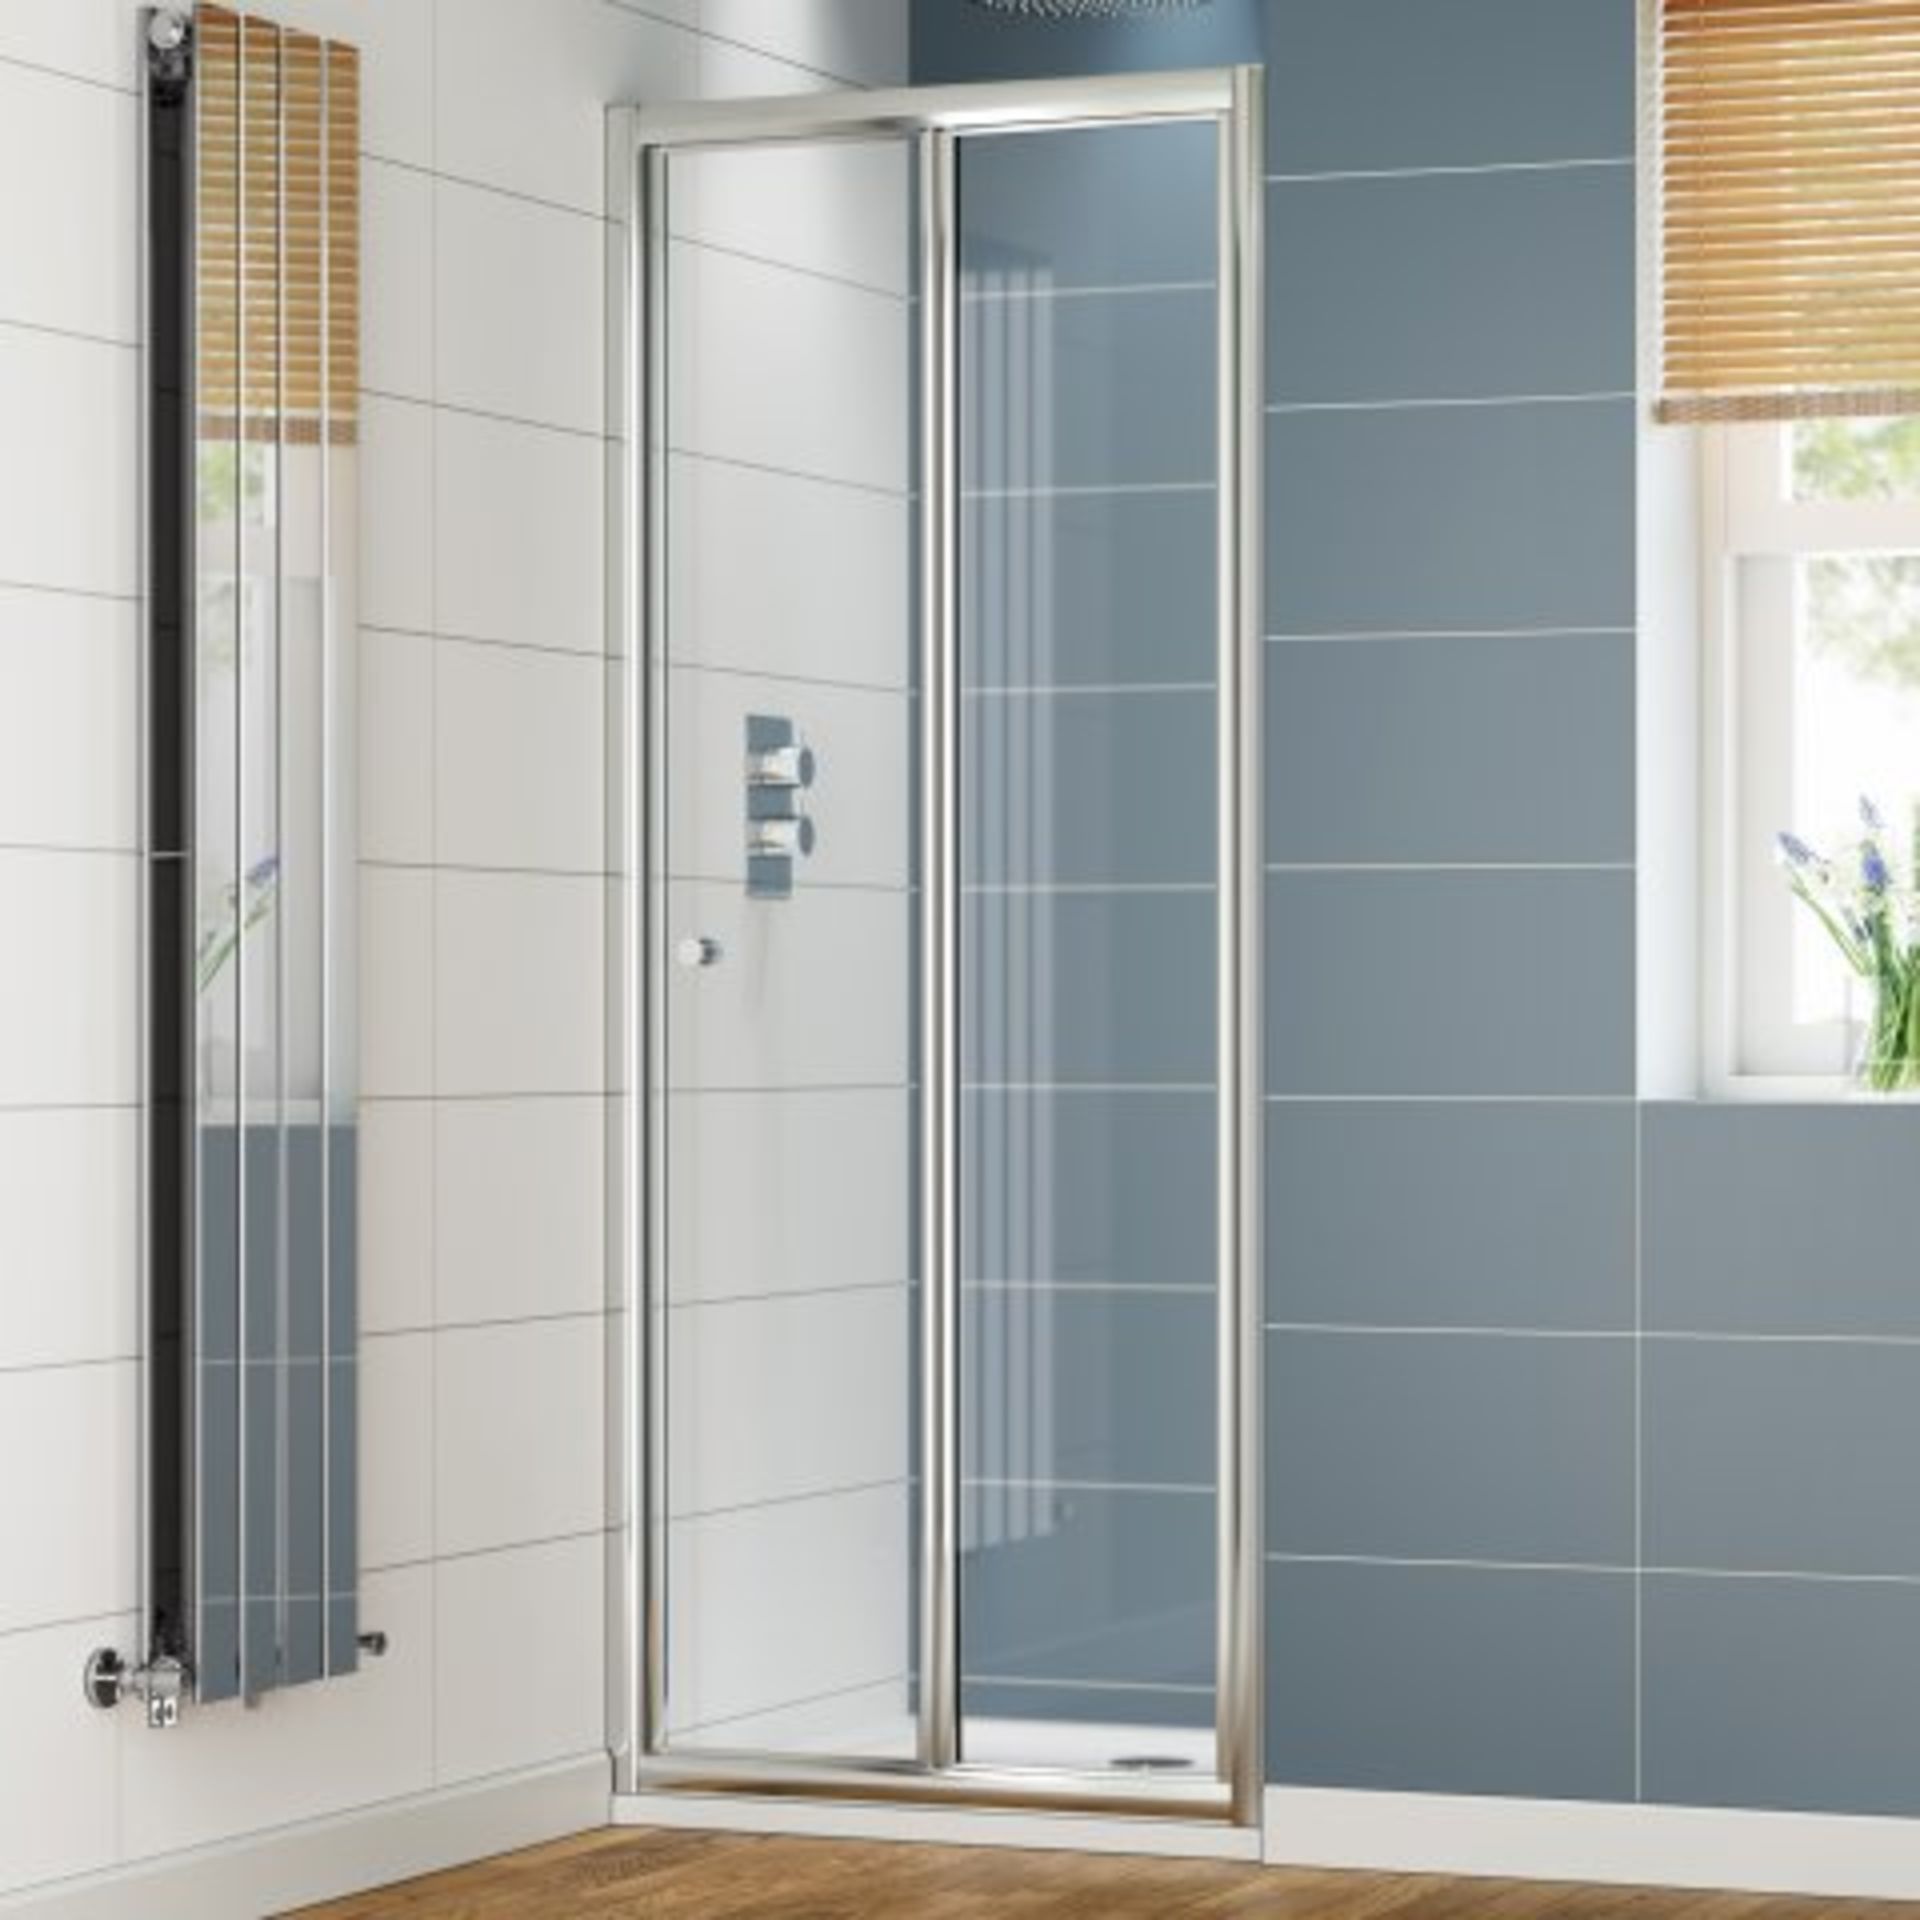 (G88) 1000mm - Elements Bi Fold Shower Door. RRP £299.99. The bi fold design allows for the door